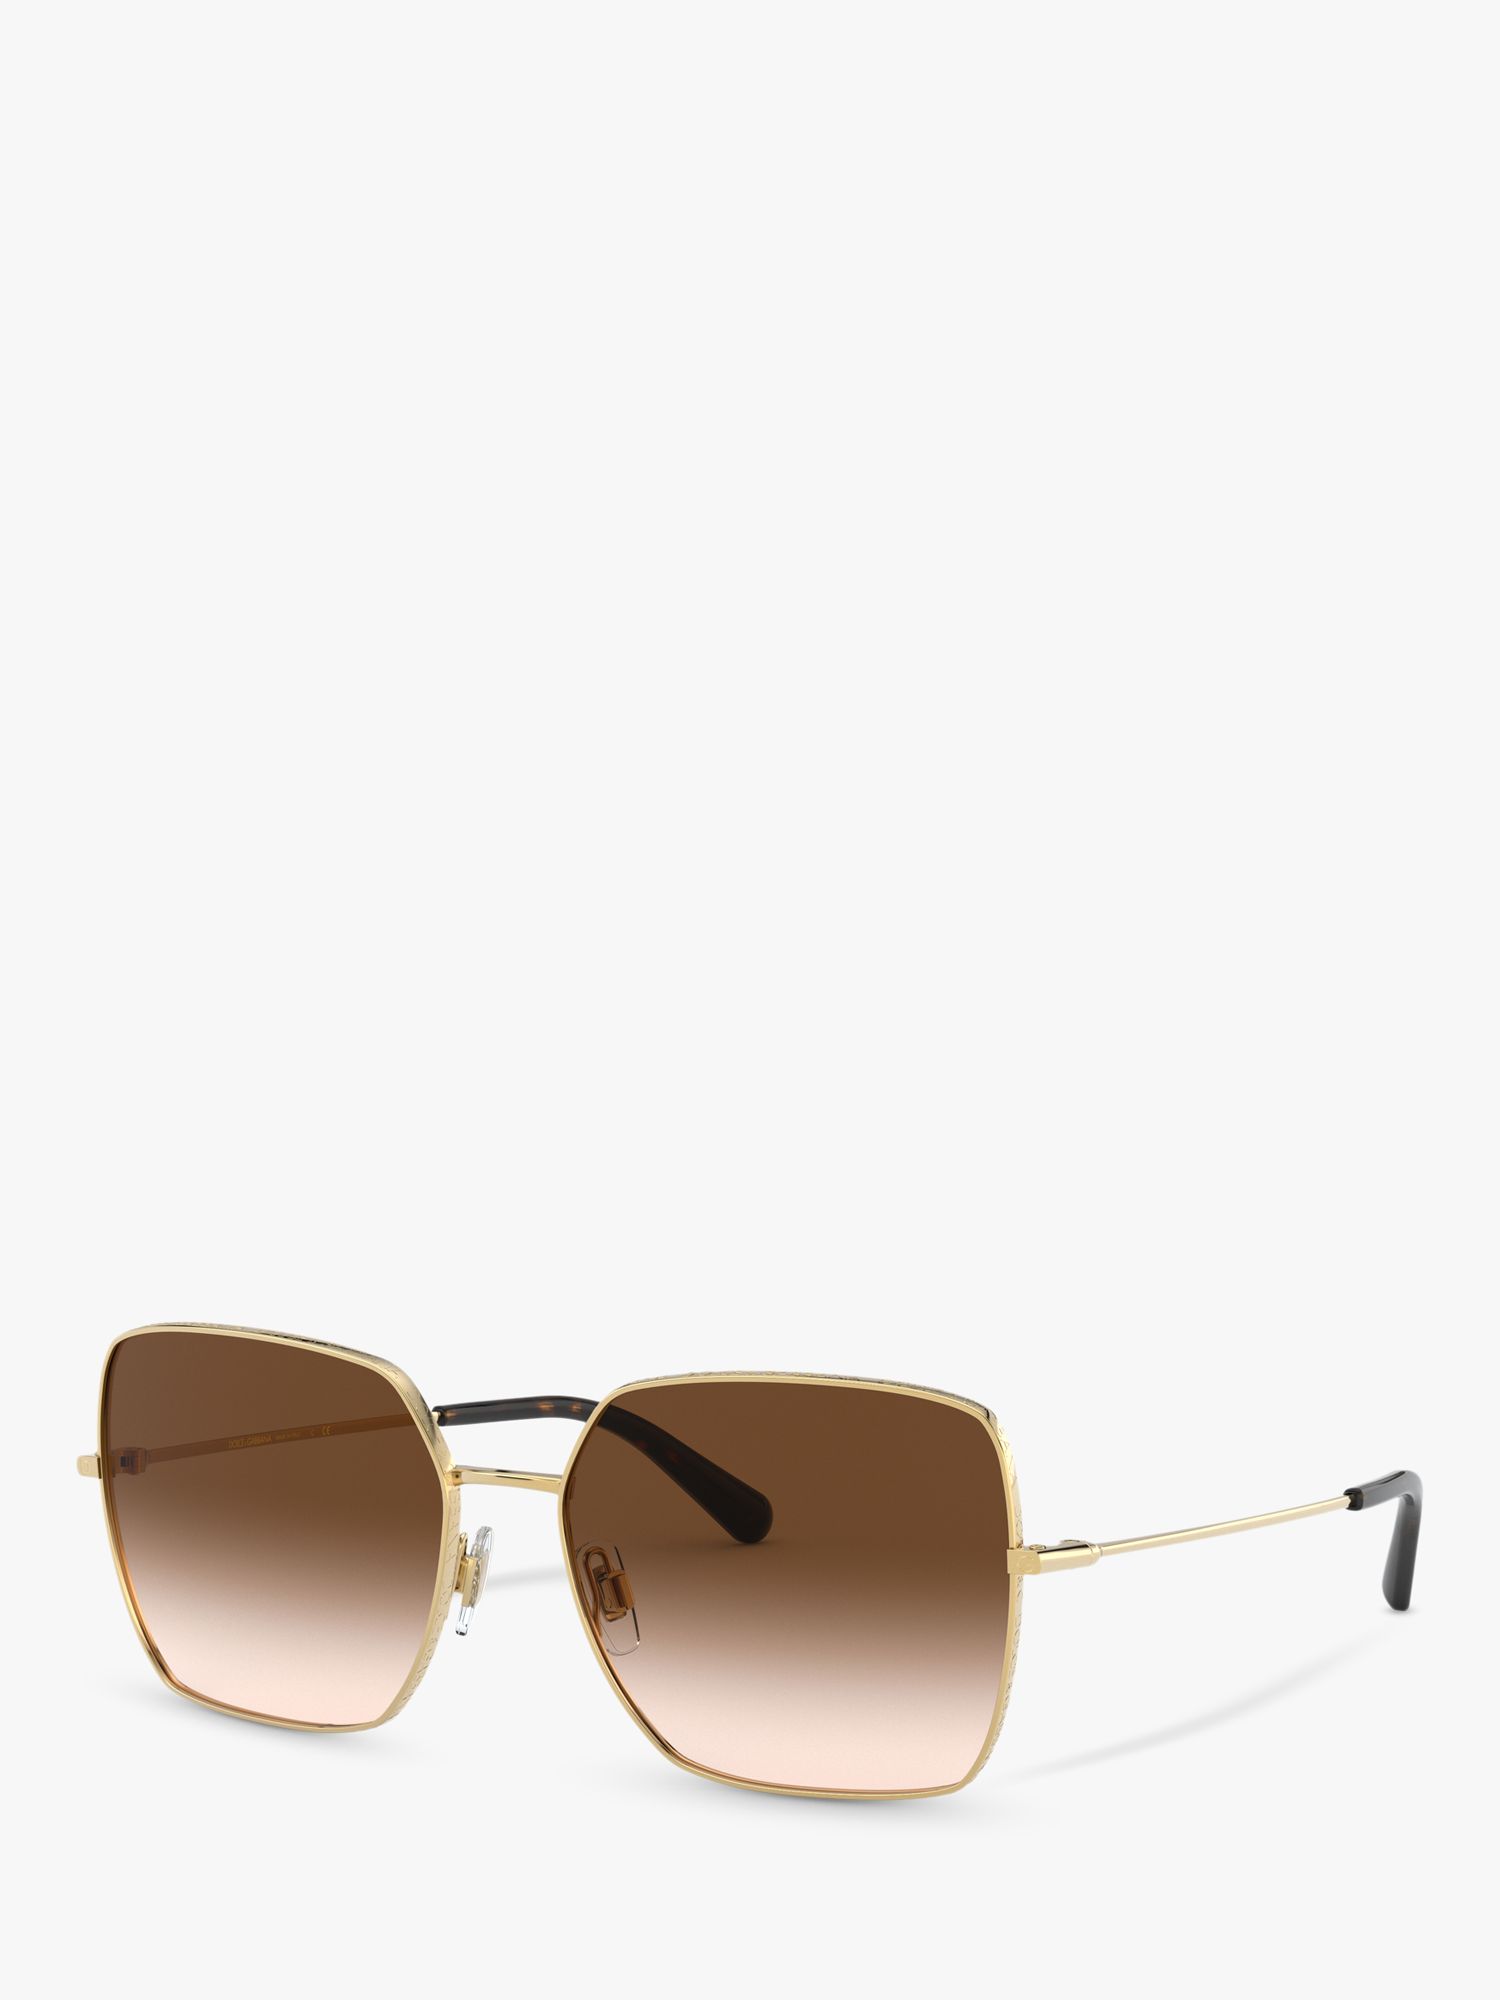 Dolce & Gabbana DG2242 Women's Square Sunglasses, Gold/Brown Gradient at  John Lewis & Partners